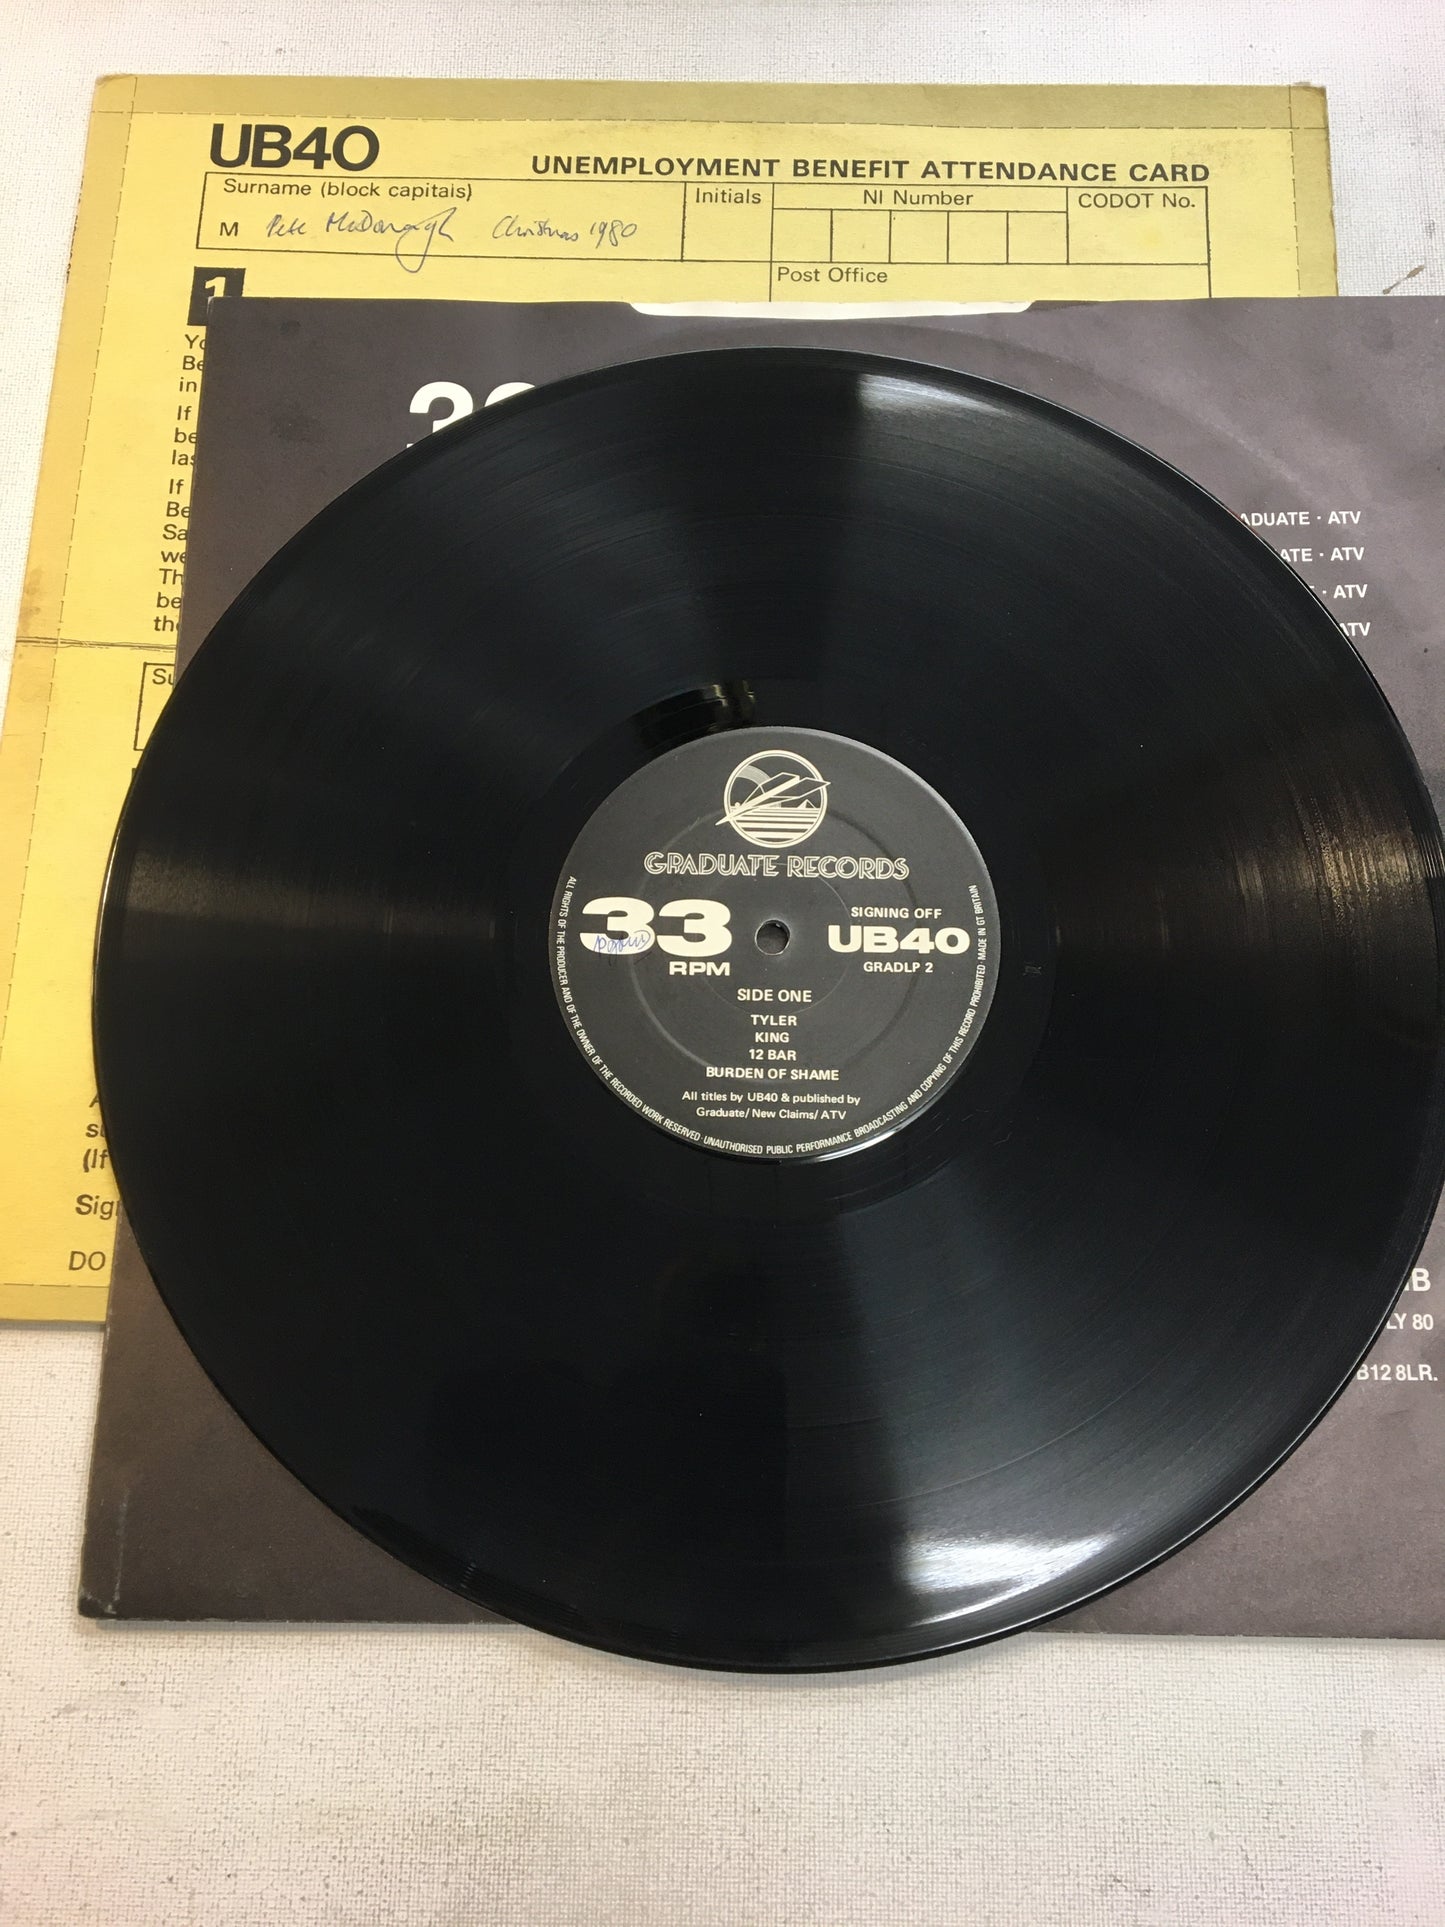 UB40 LP + 12” ; SIGNING OFF